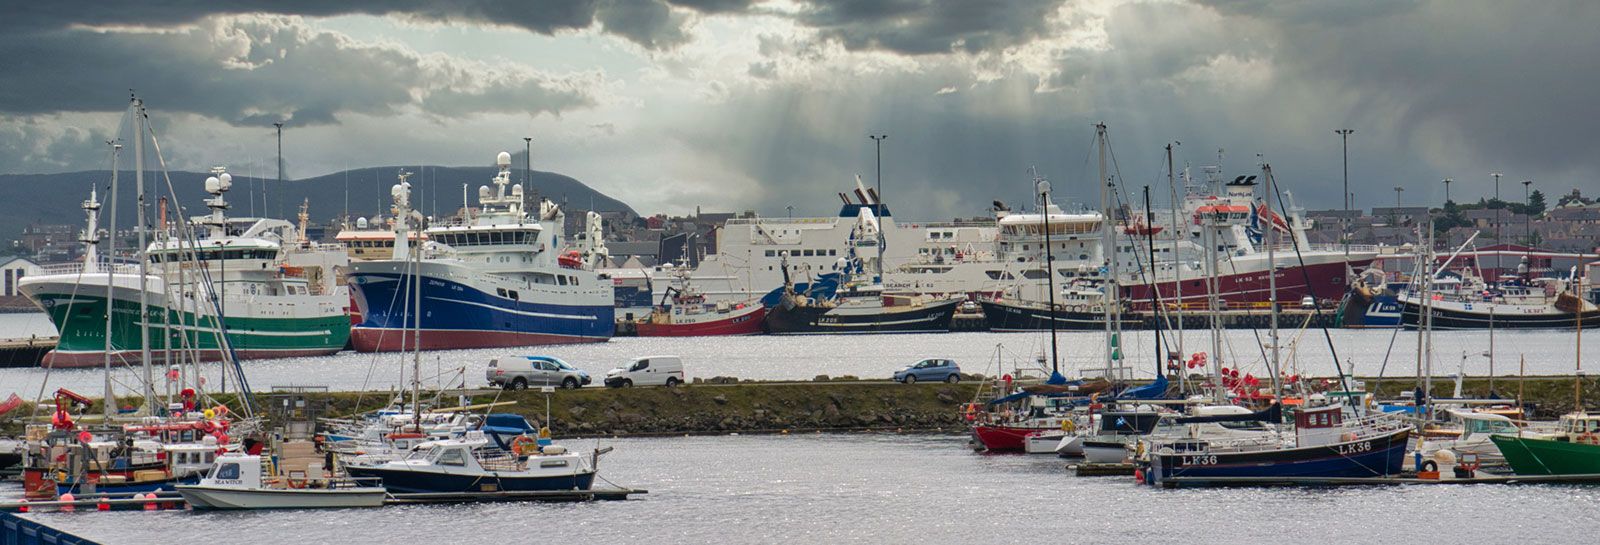 Lerwick Harbour in Shetland banner image